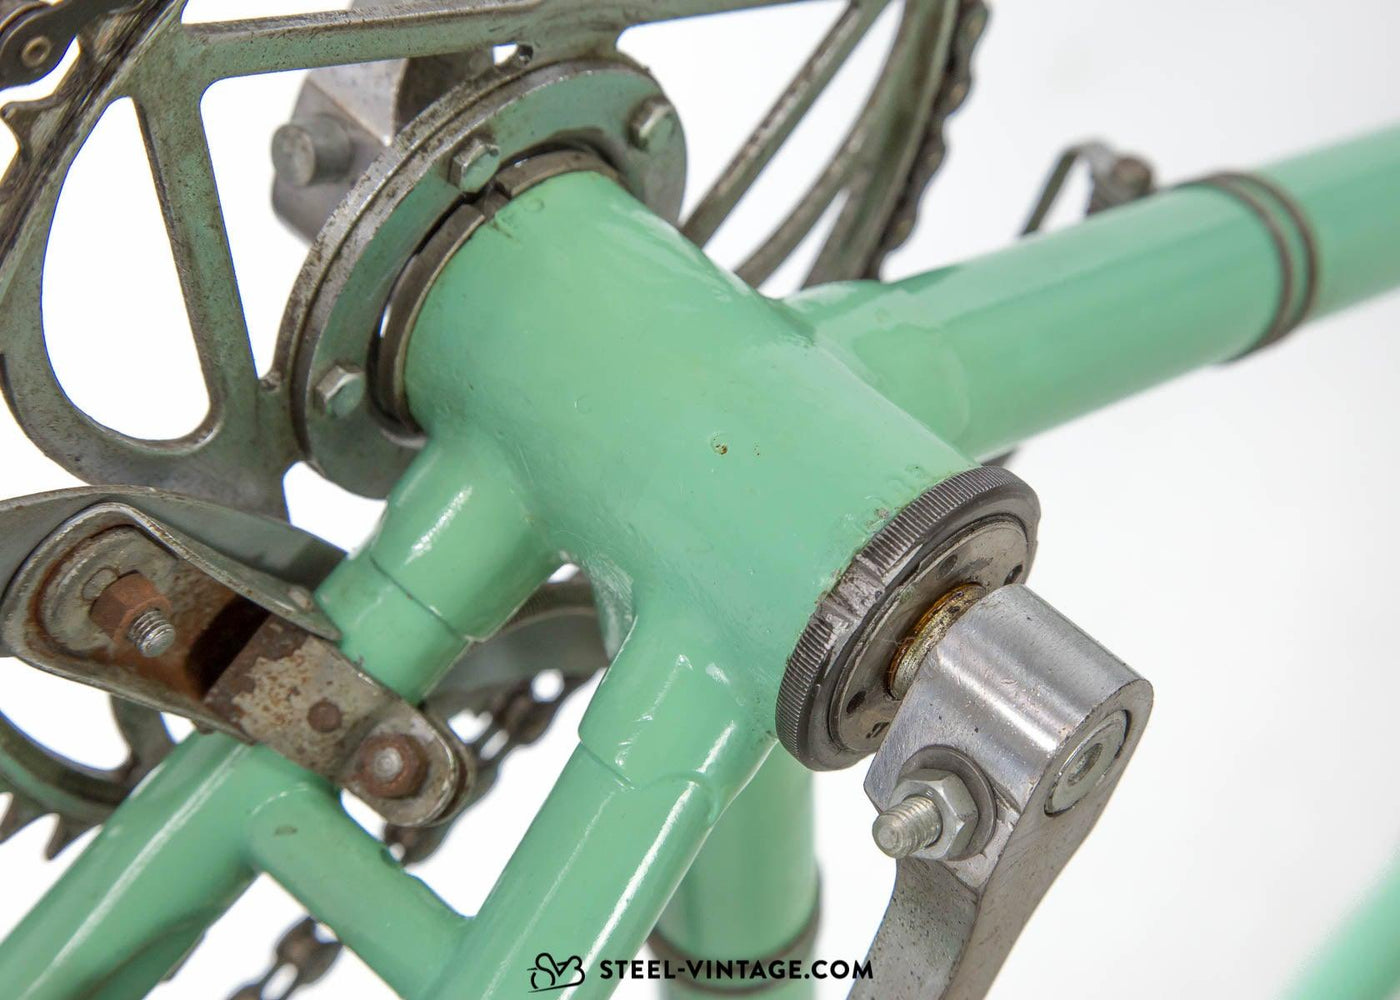 Bianchi Branded Vittoria Margherita Bicycle 1940s - Steel Vintage Bikes